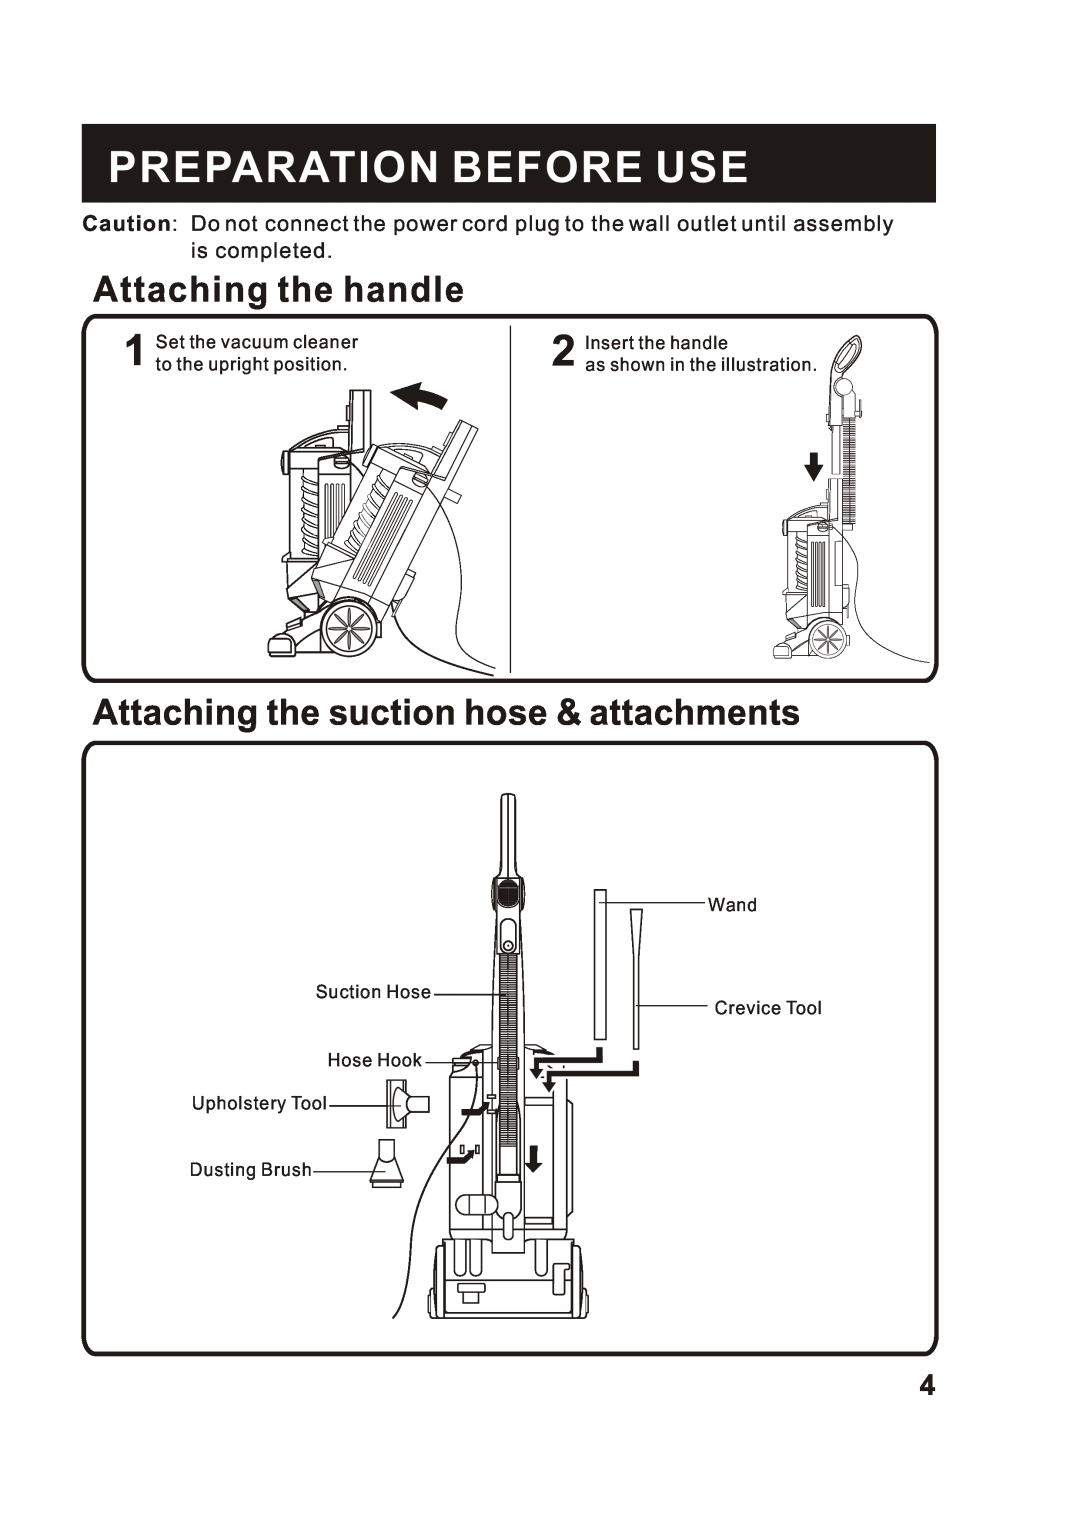 Fantom Vacuum FM760K Preparation Before Use, Attaching the handle, Attaching the suction hose & attachments, is completed 